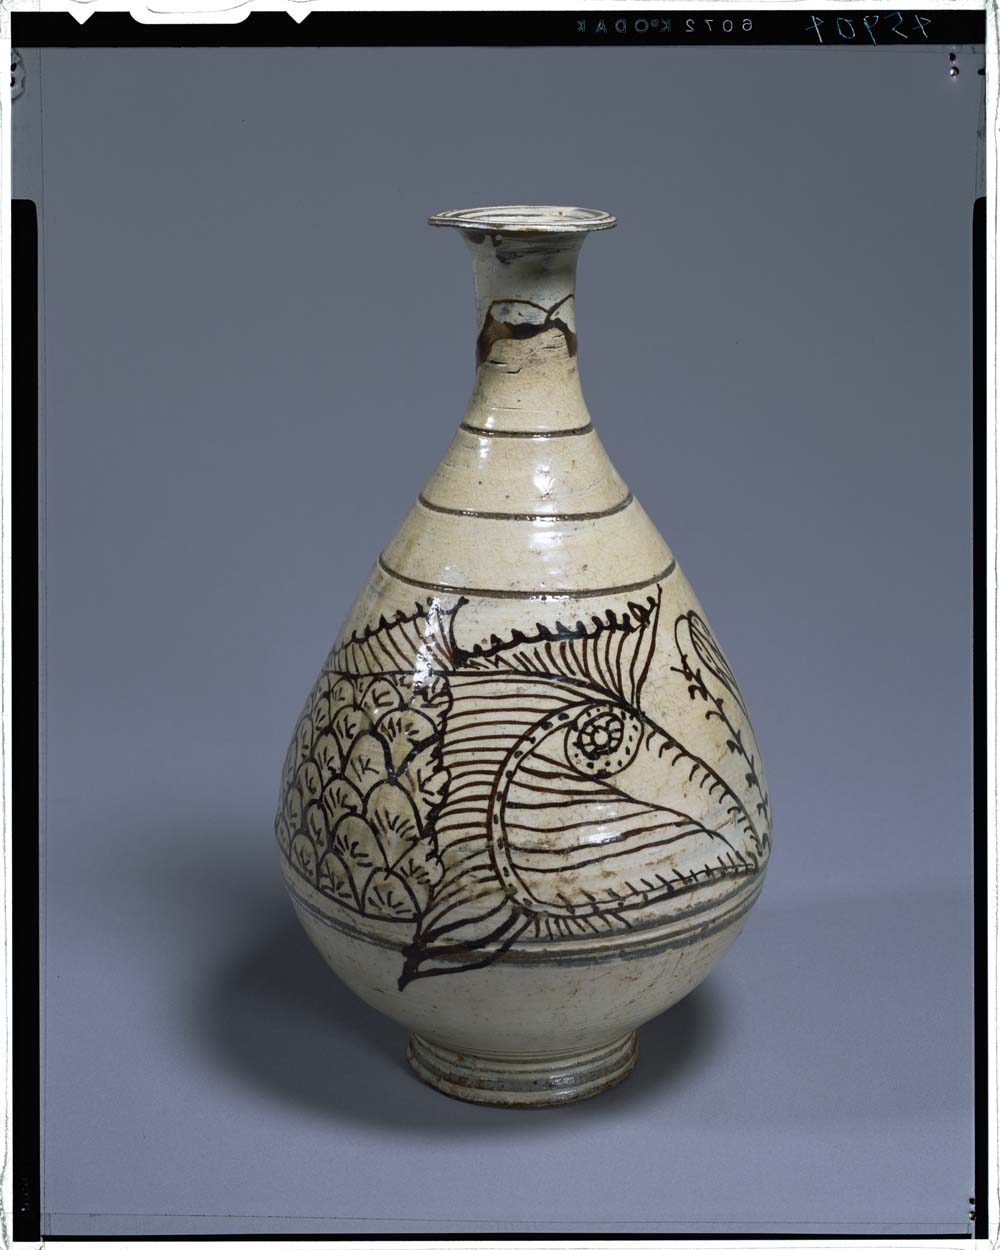 C0045904 粉青沙器鉄絵魚文瓶 - 東京国立博物館 画像検索